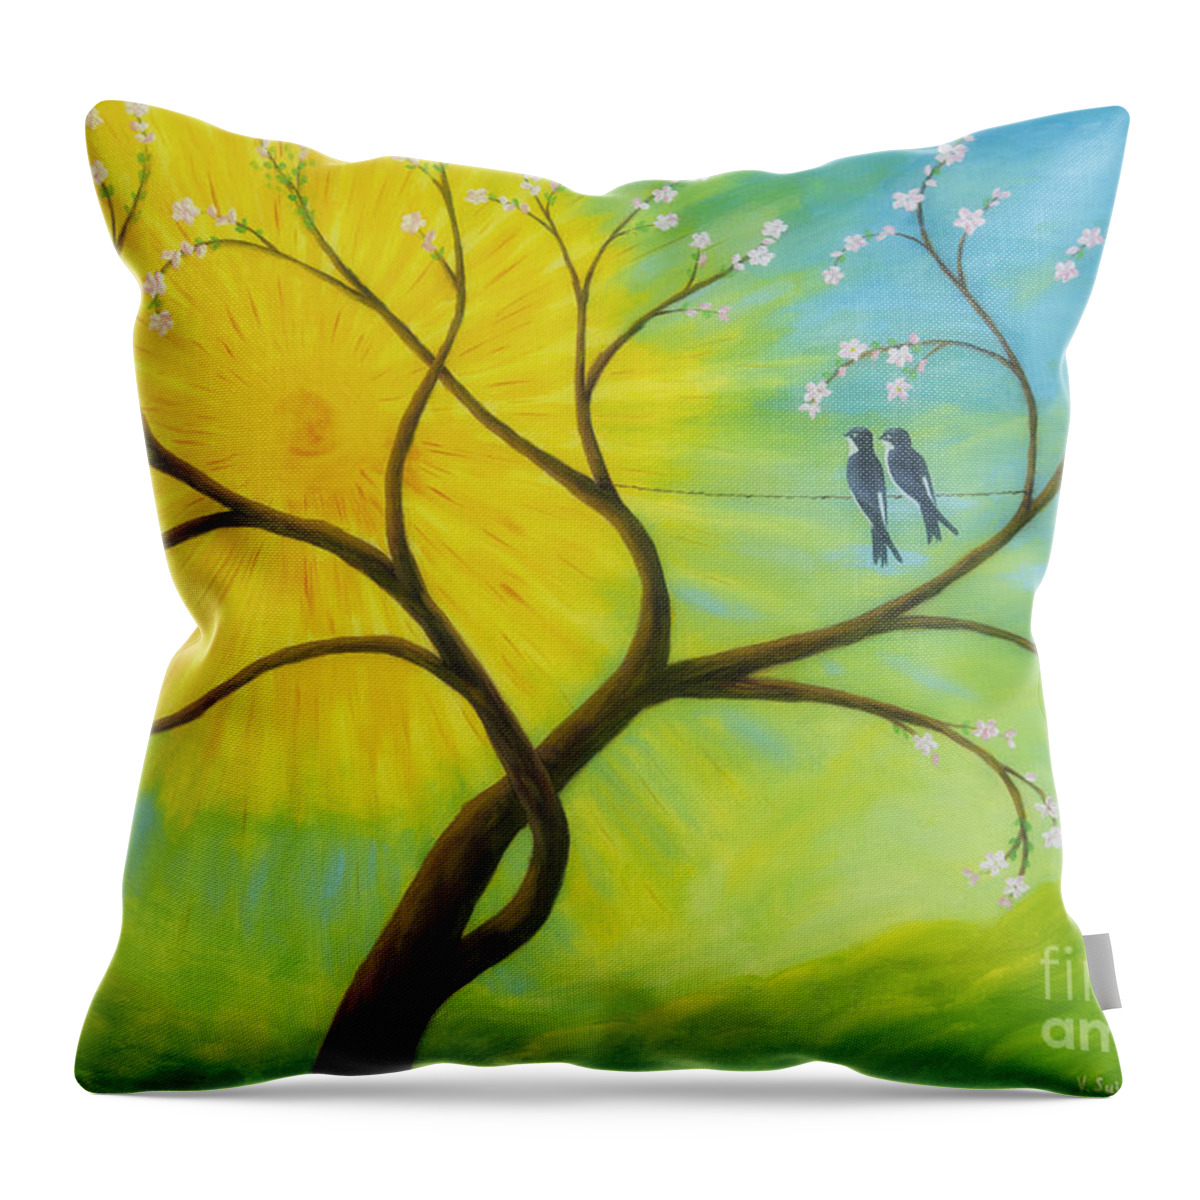 Art Throw Pillow featuring the painting Spring by Veikko Suikkanen